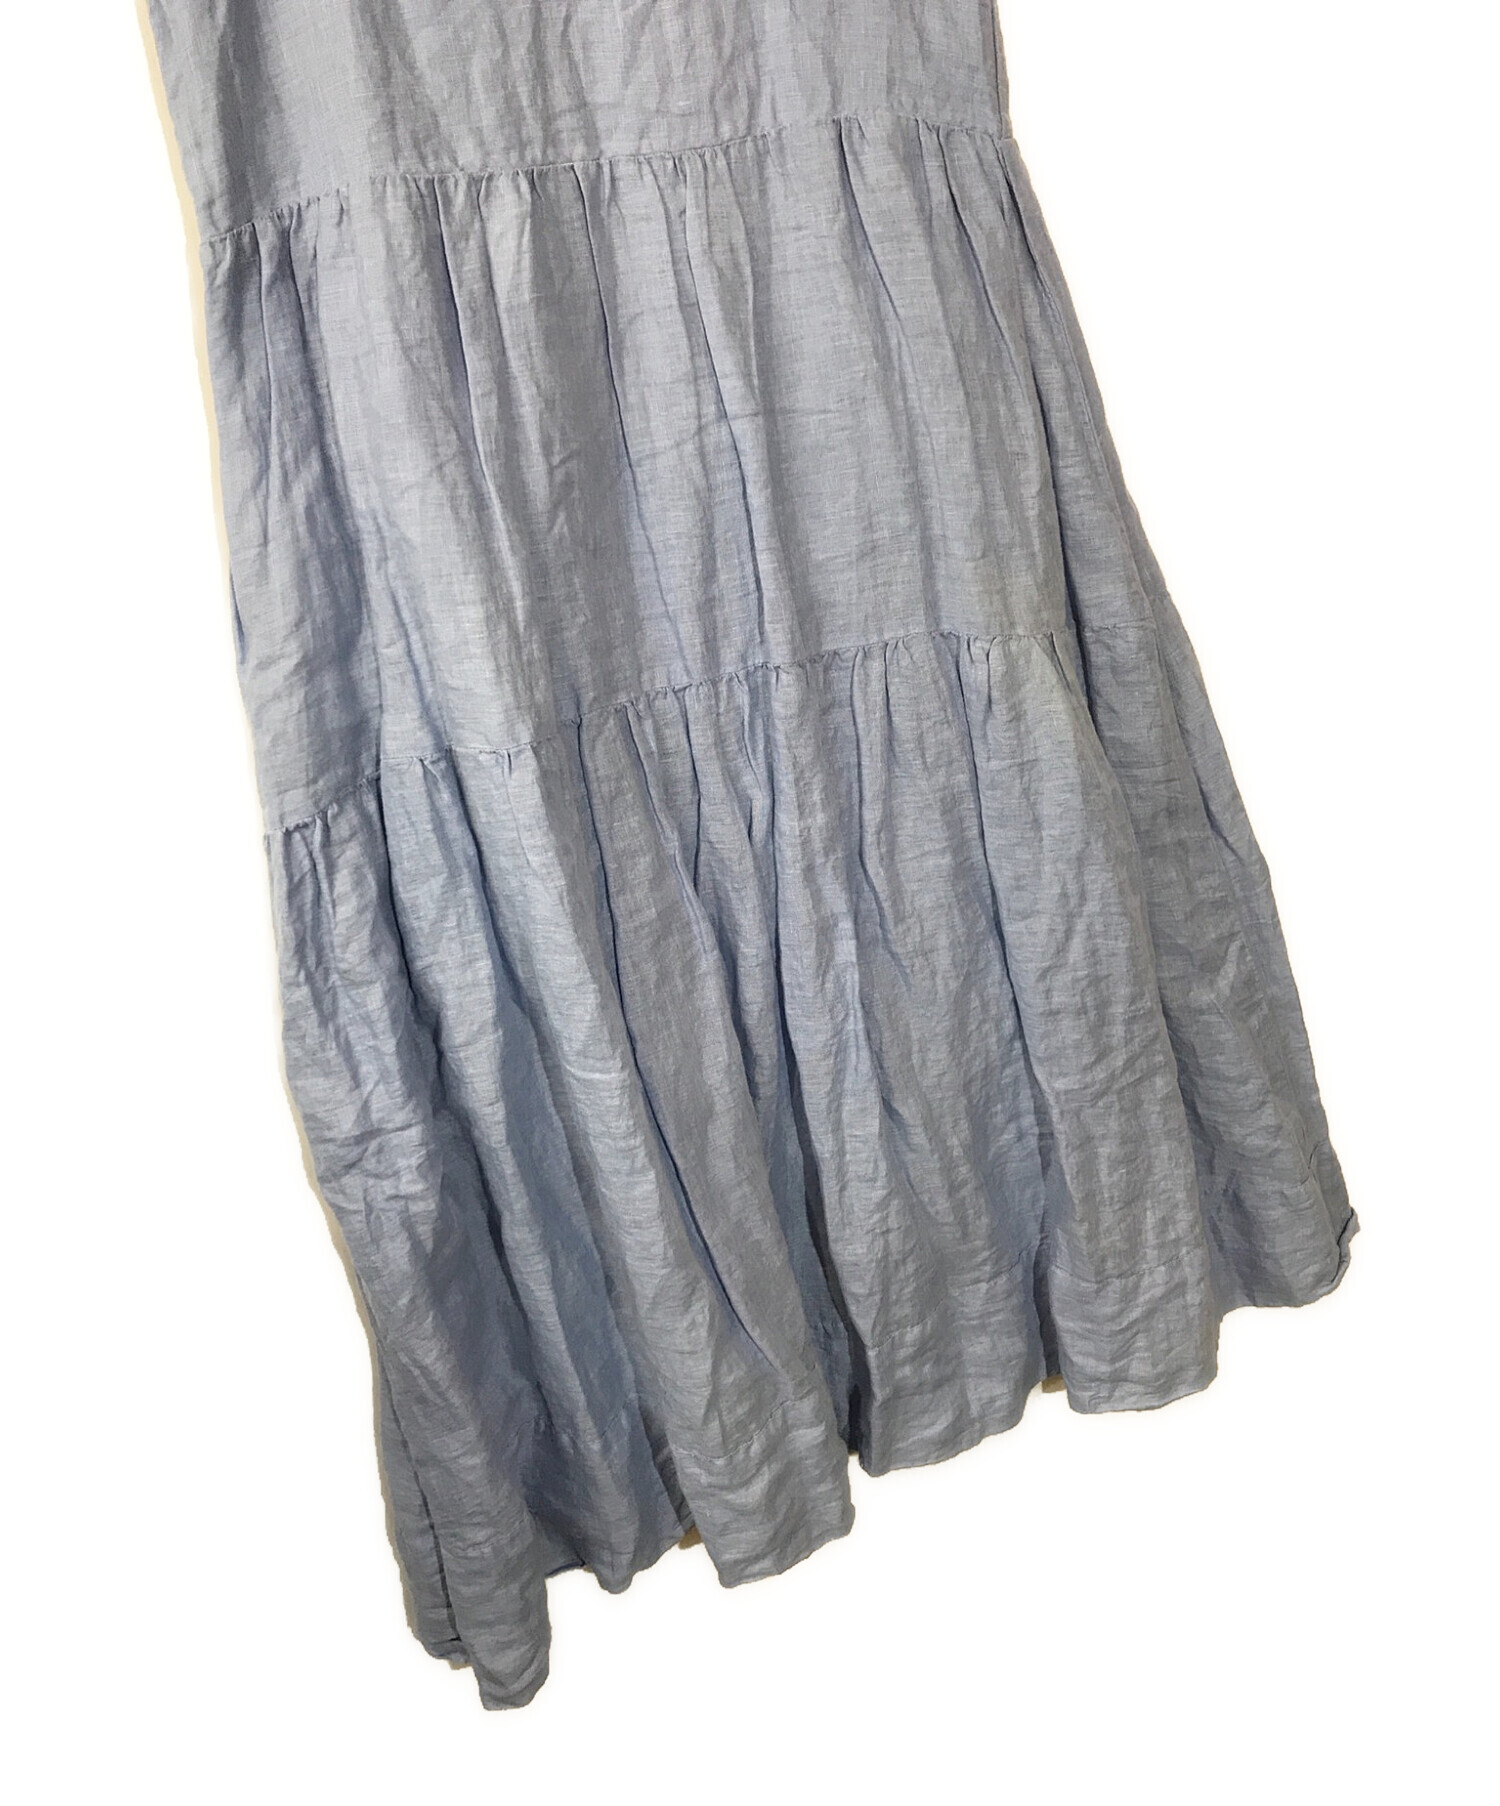 Ron Herman × CP SHADES (ロンハーマン×シーピーシェイズ) Gia V Neck Tiered Linen Dress　 リネンドレスノースリーブワンピース ブルー サイズ:XS